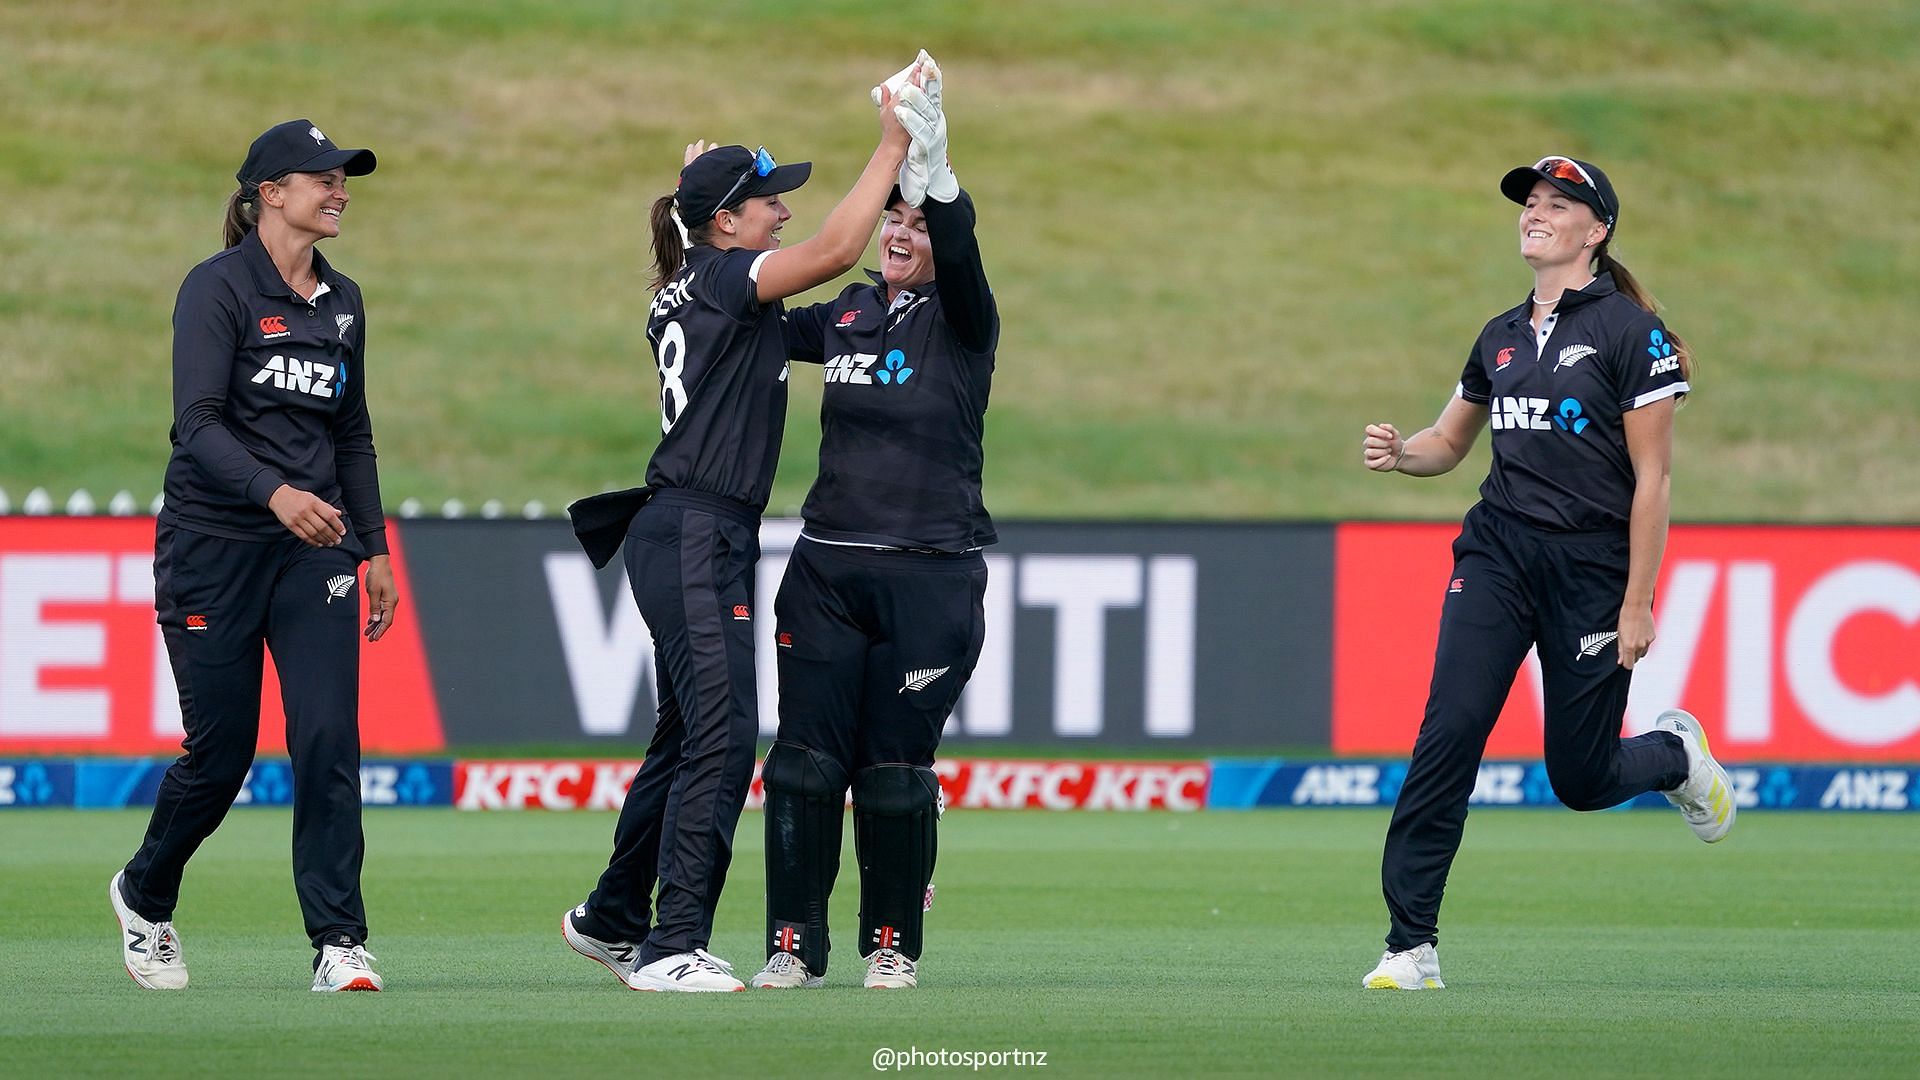 <div class="paragraphs"><p>NZ women's cricket team celebrate a wicket</p></div>